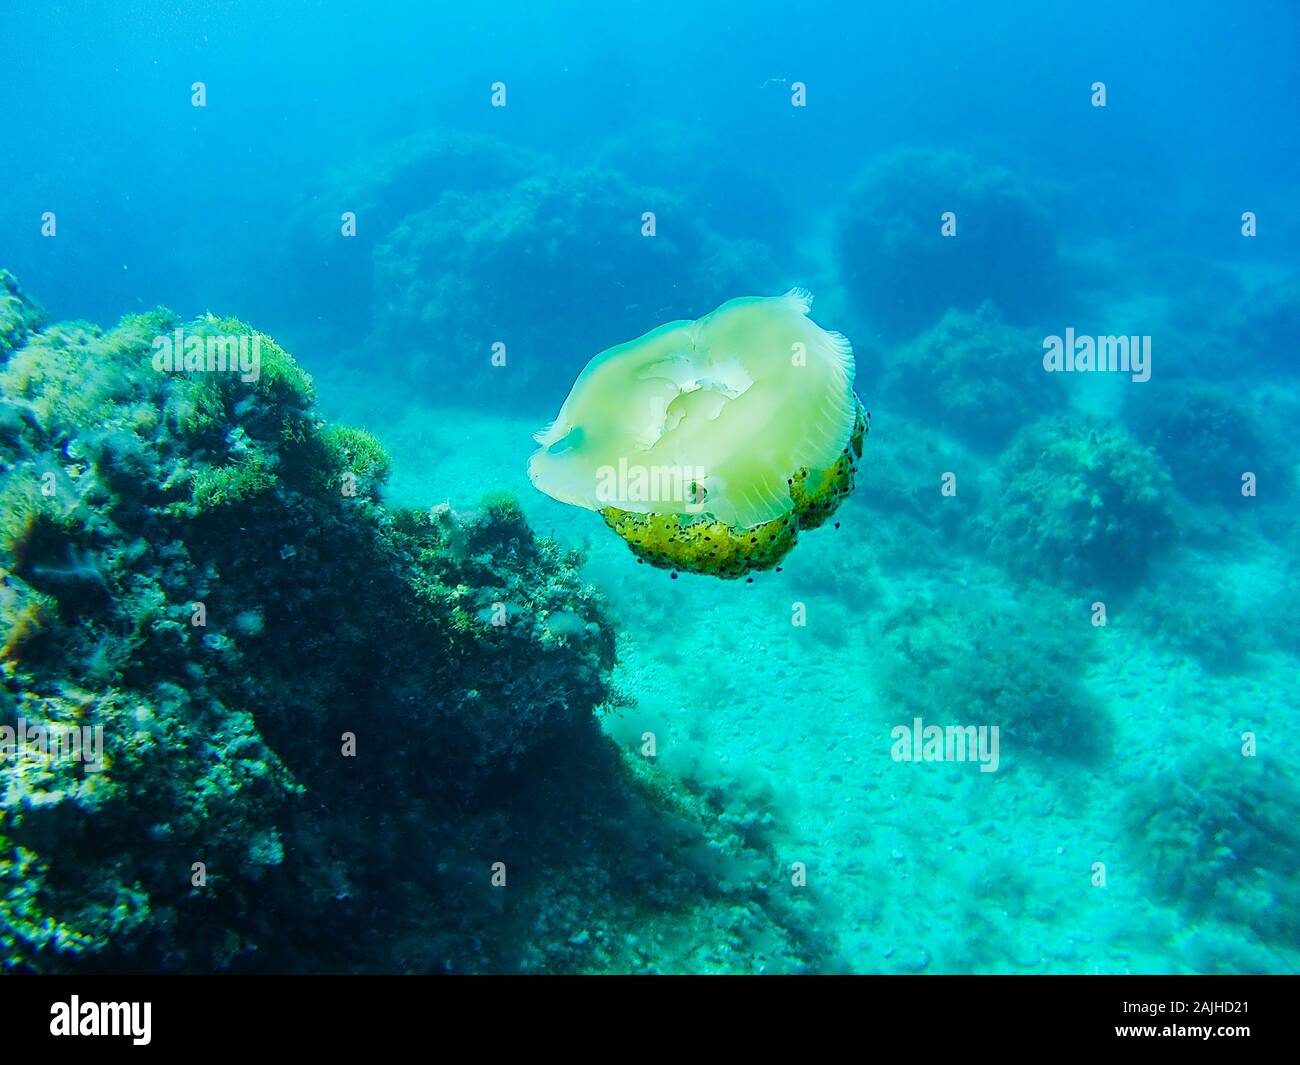 Underwater photograph of jellyfish in the Mediterranean Sea Stock Photo